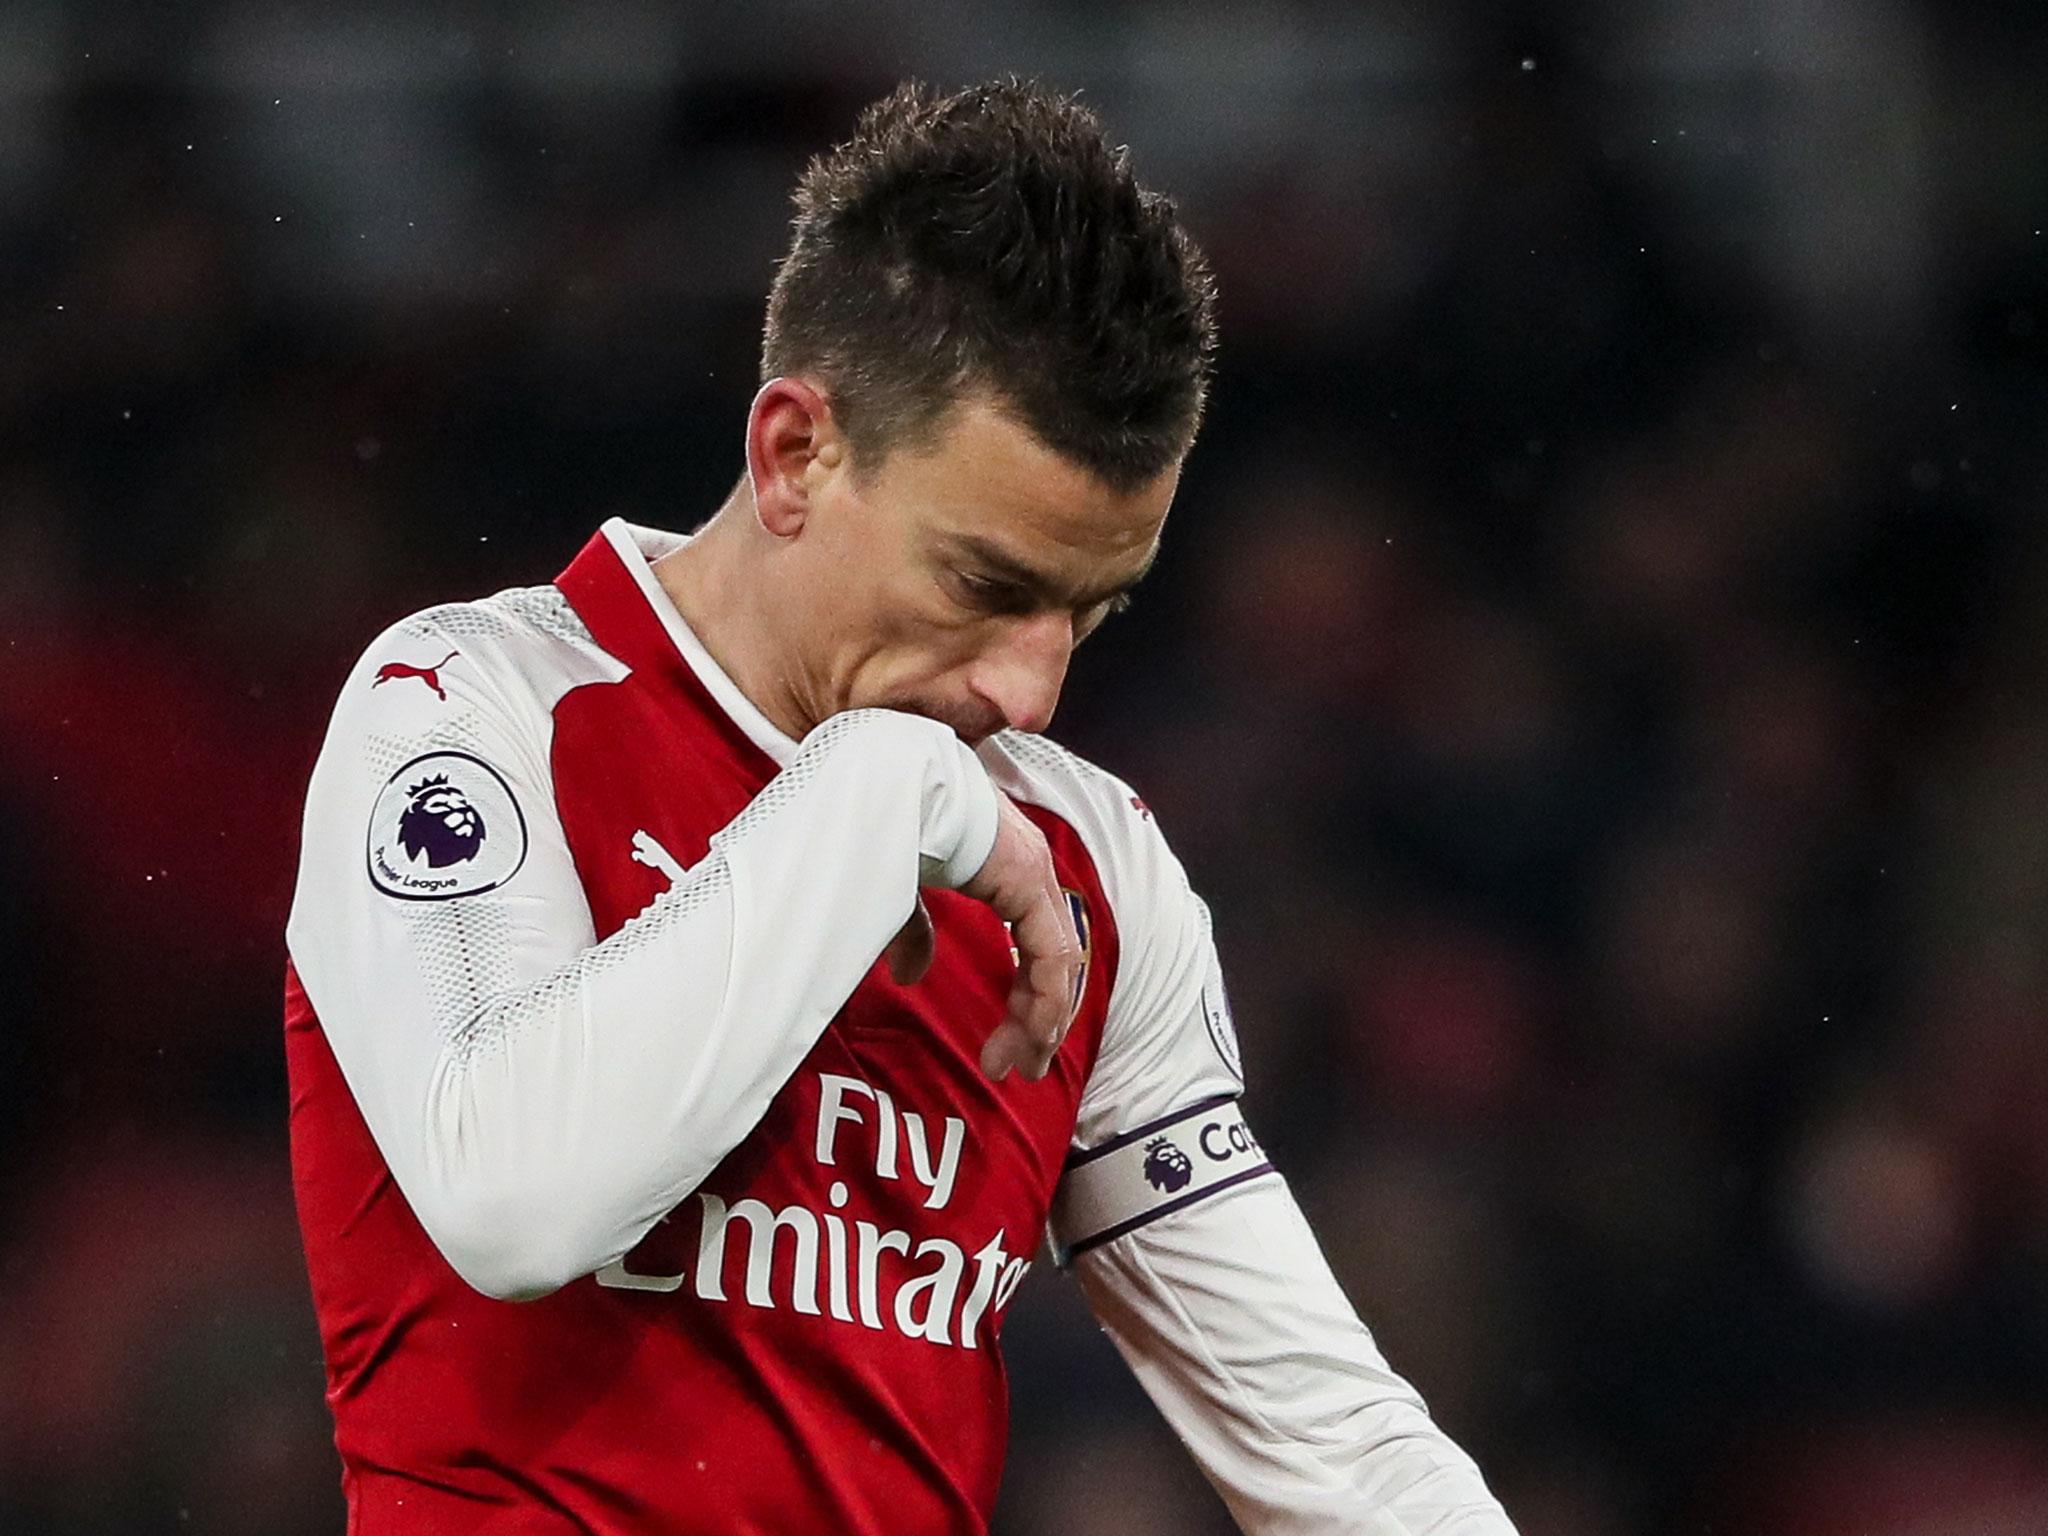 Arsenal were resoundingly beaten at the Emirates